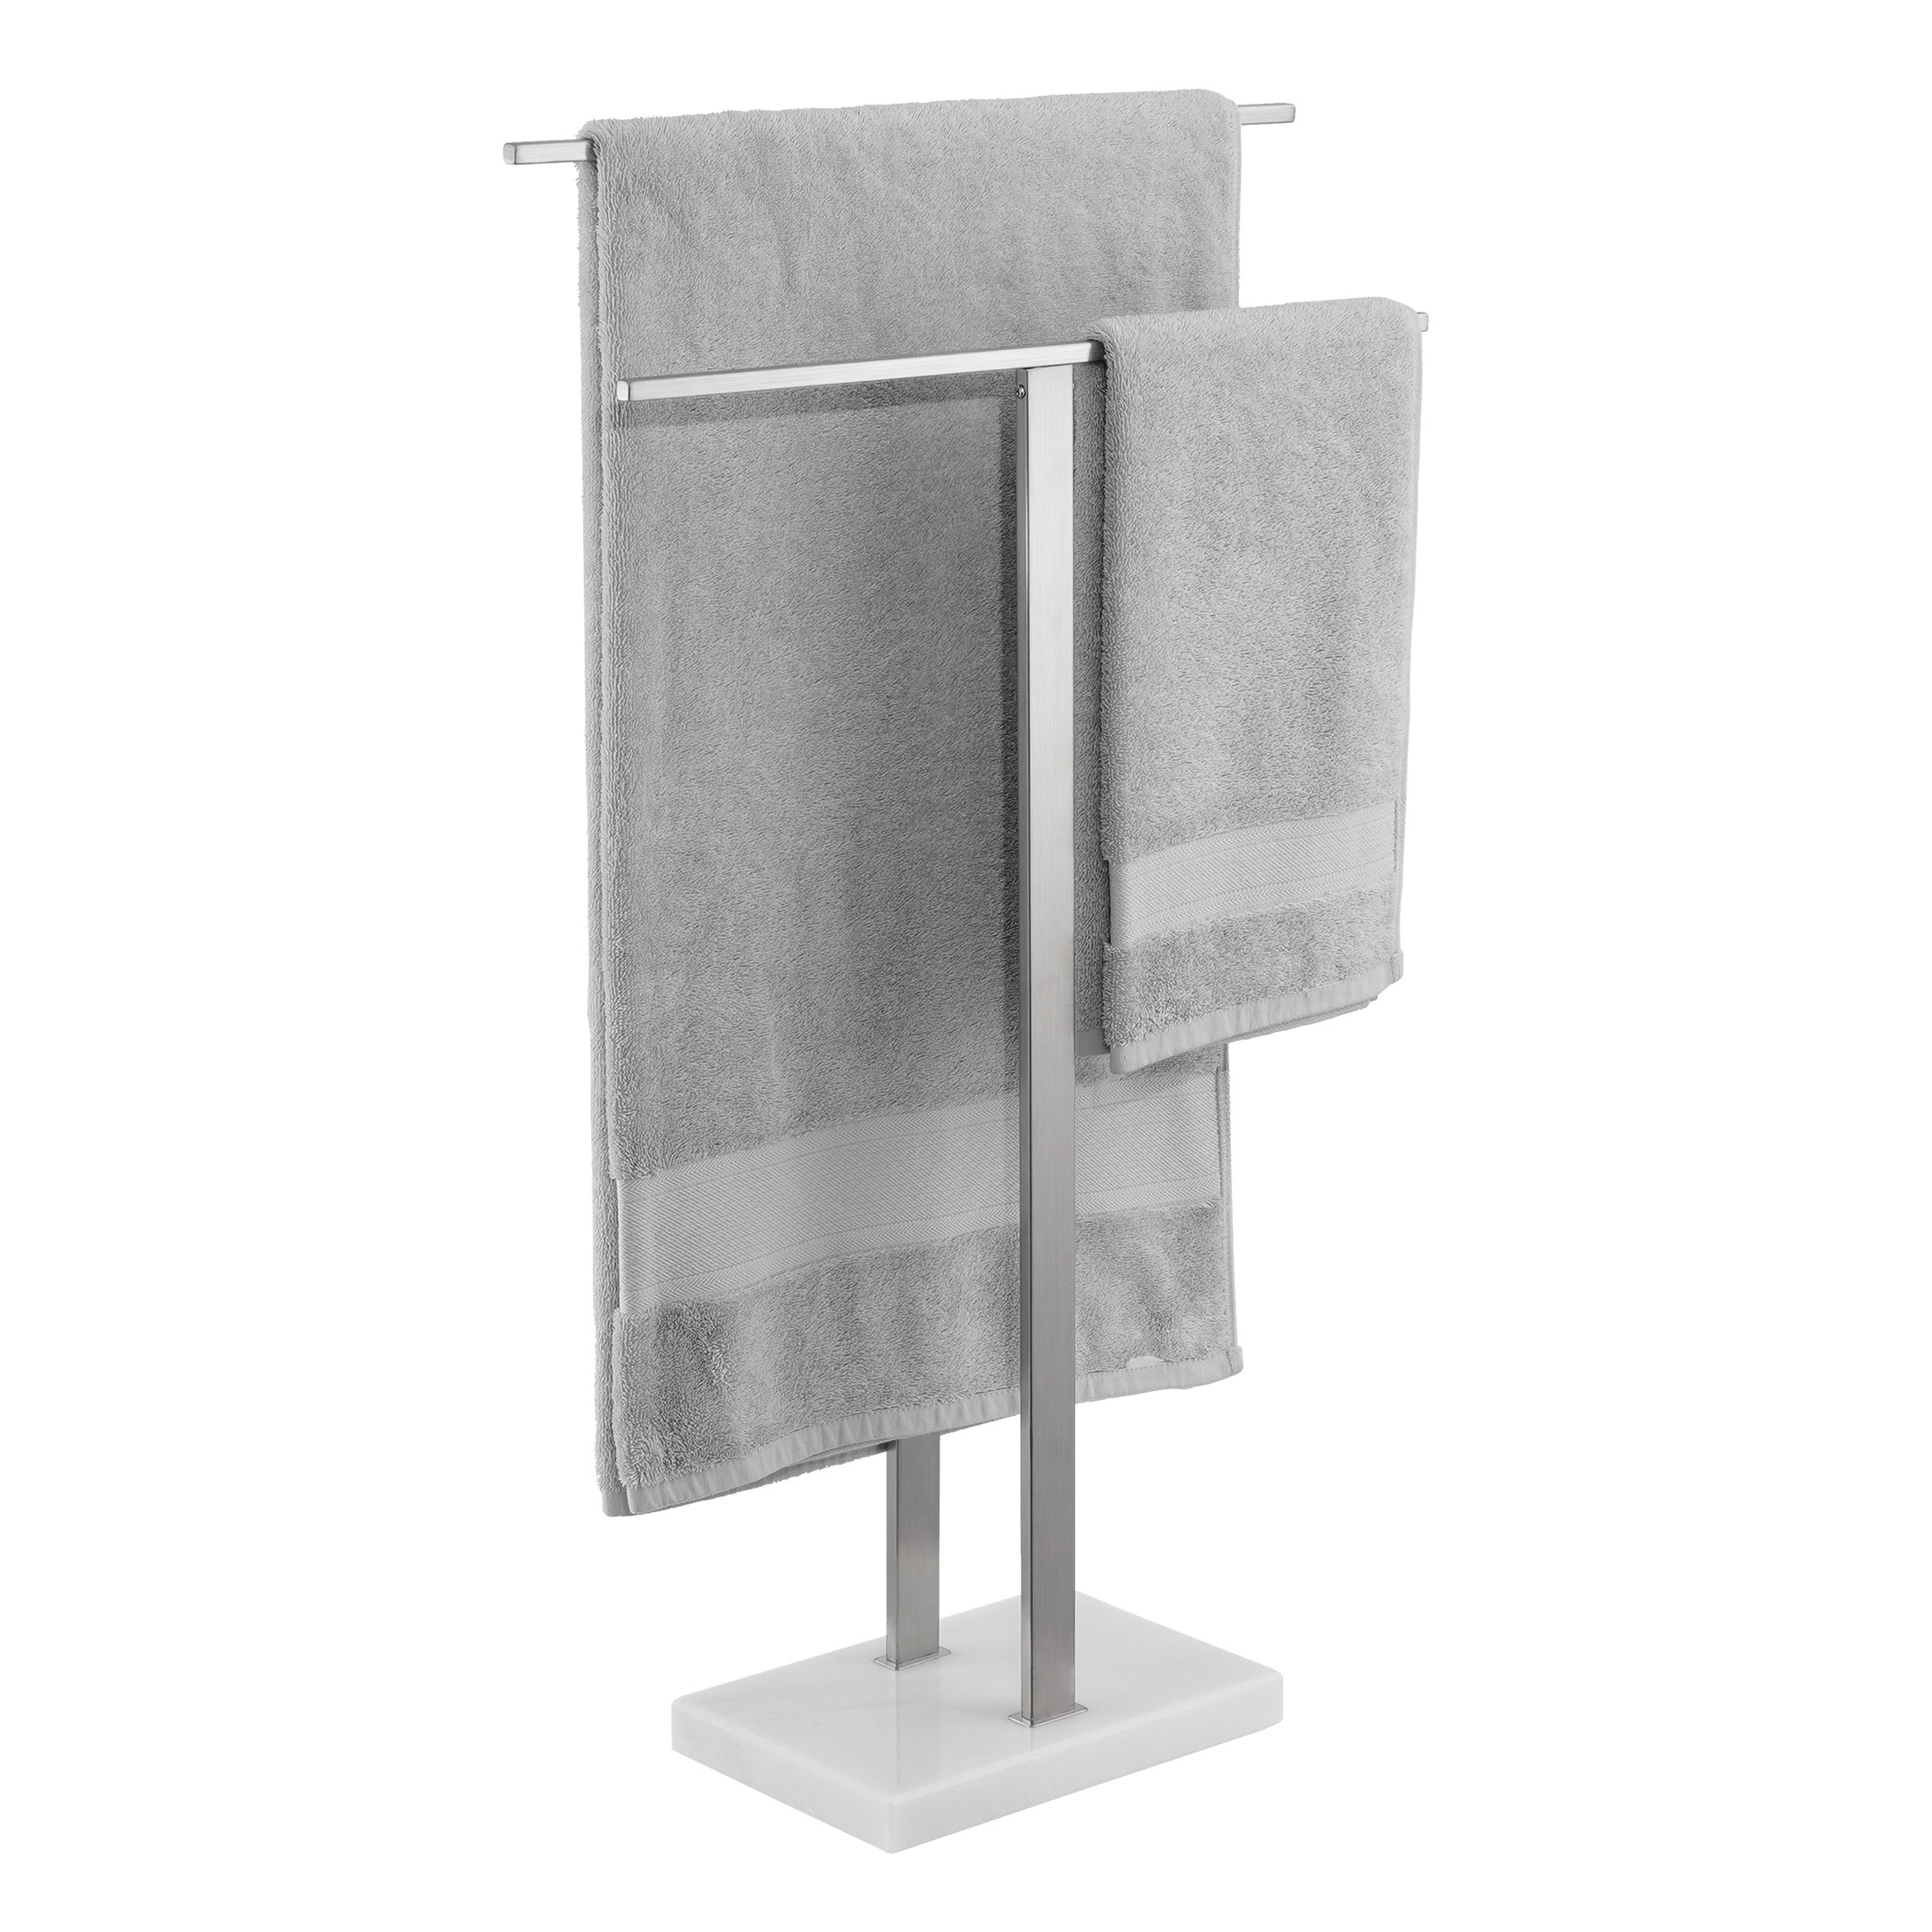 2 Tier Stainless Steel Storage Shelf Bathroom Accessories Fitting